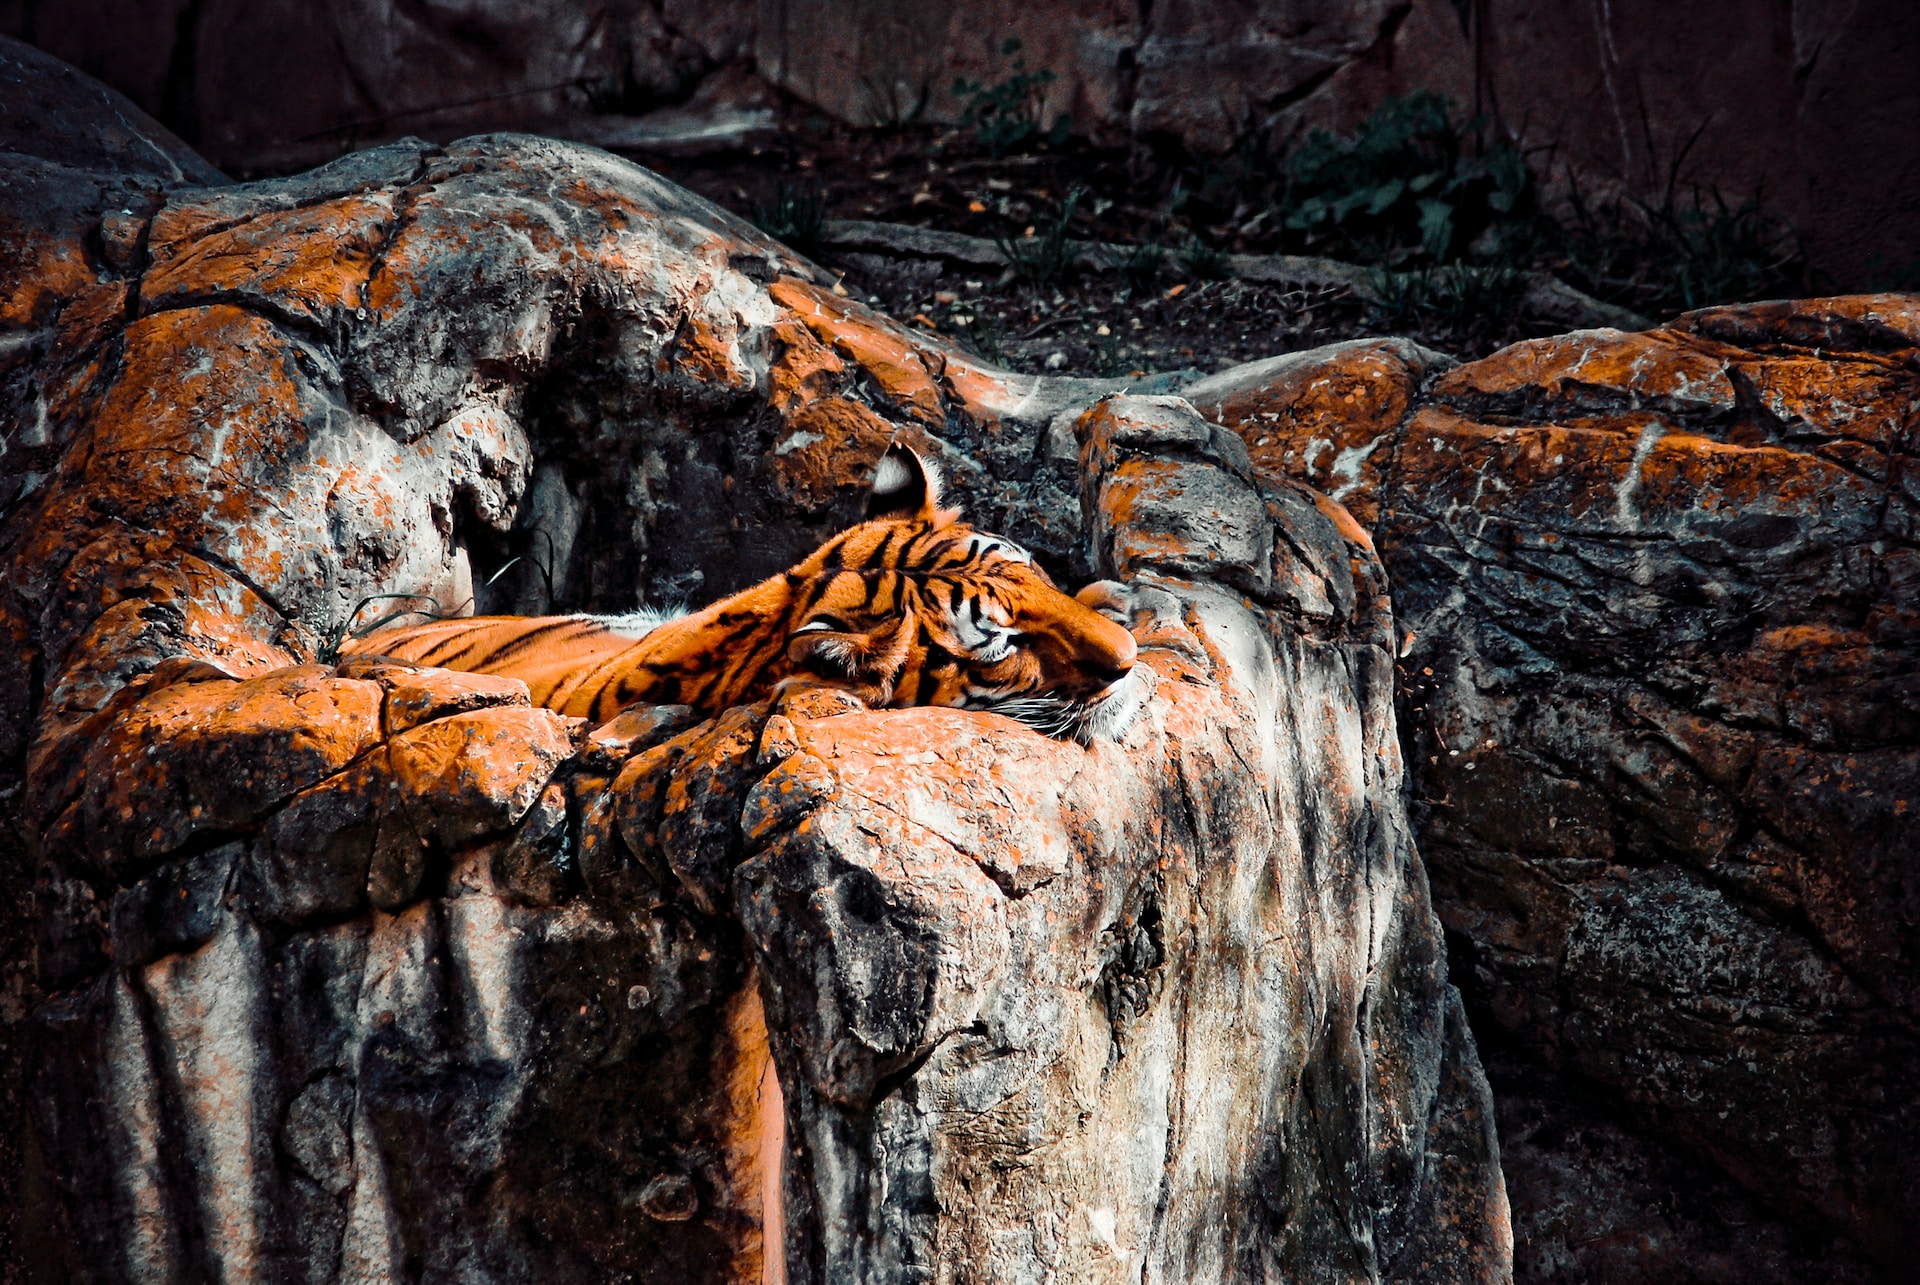 Sleeping tiger at the San Antonio Zoo, a great spot for an outdoor adventure in Texas (photo: Rafael Hoyos Weht)